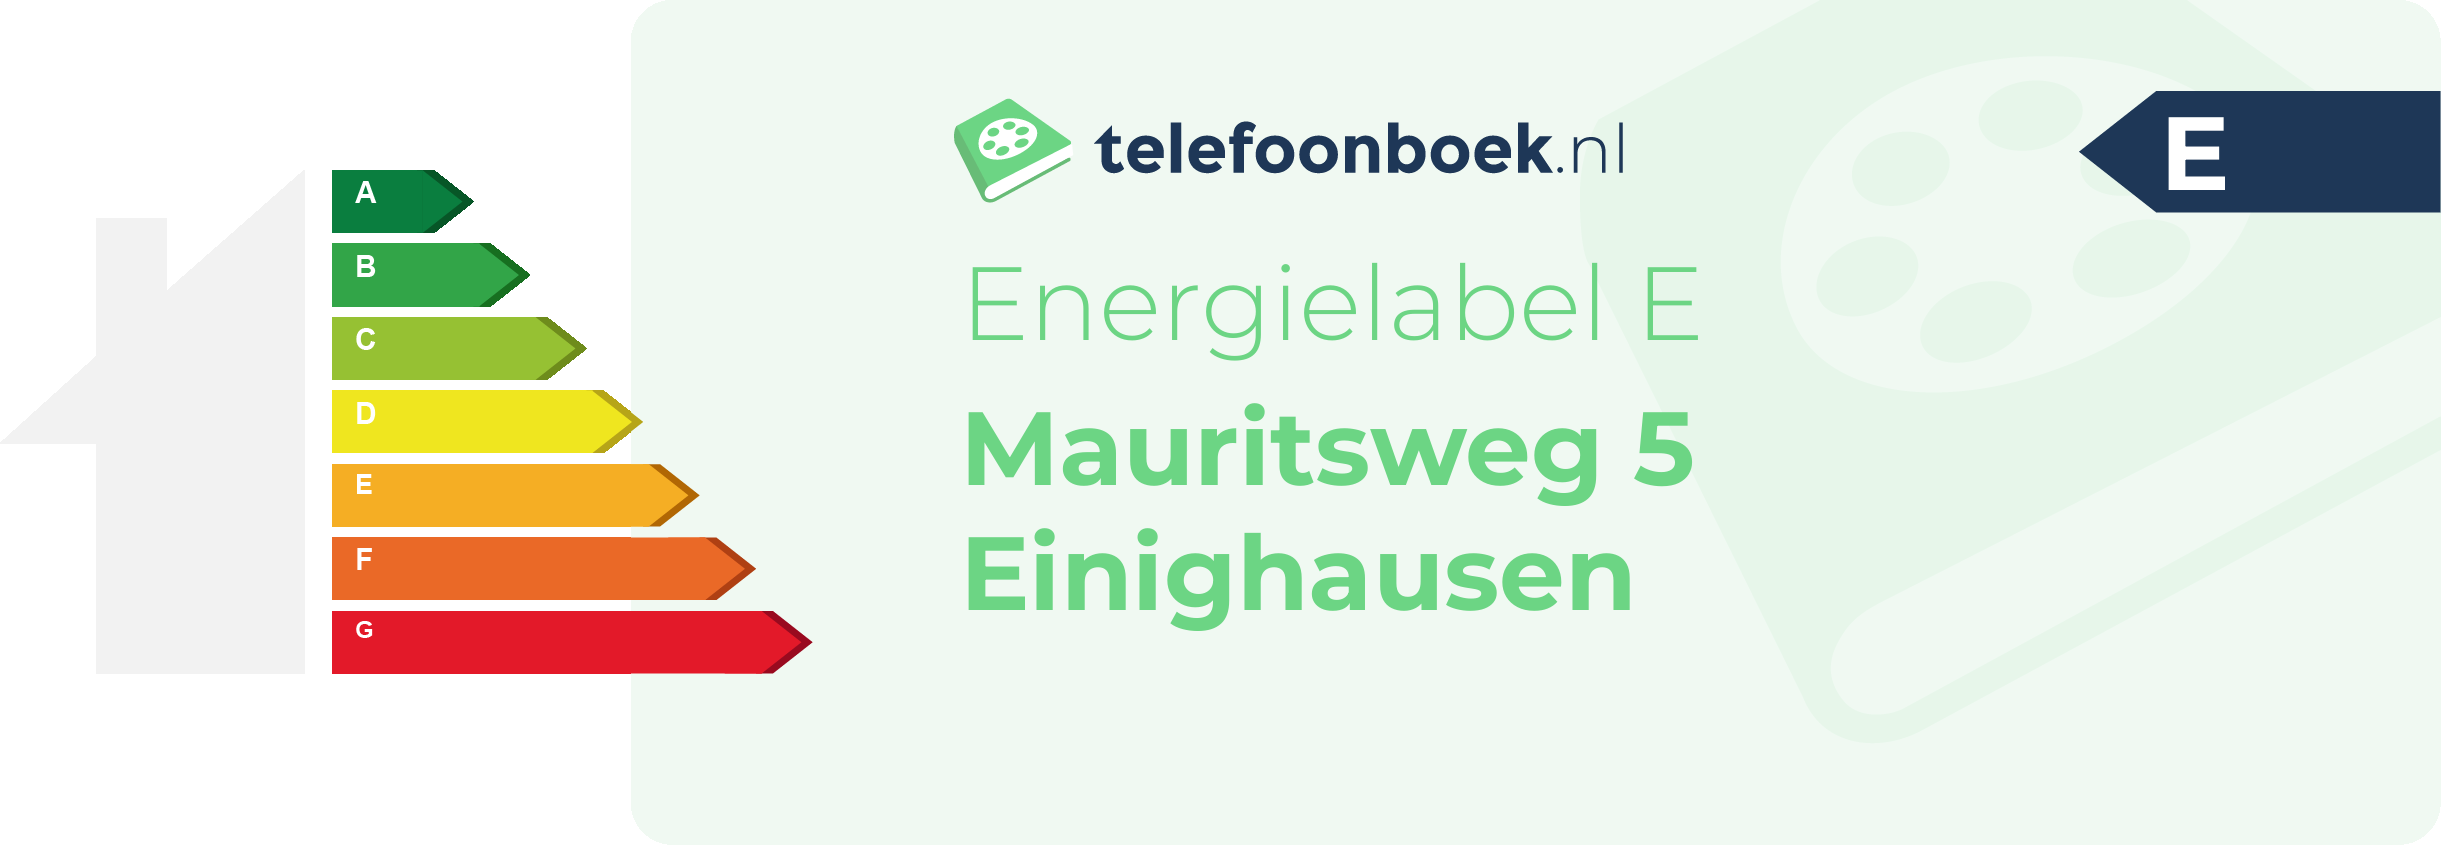 Energielabel Mauritsweg 5 Einighausen